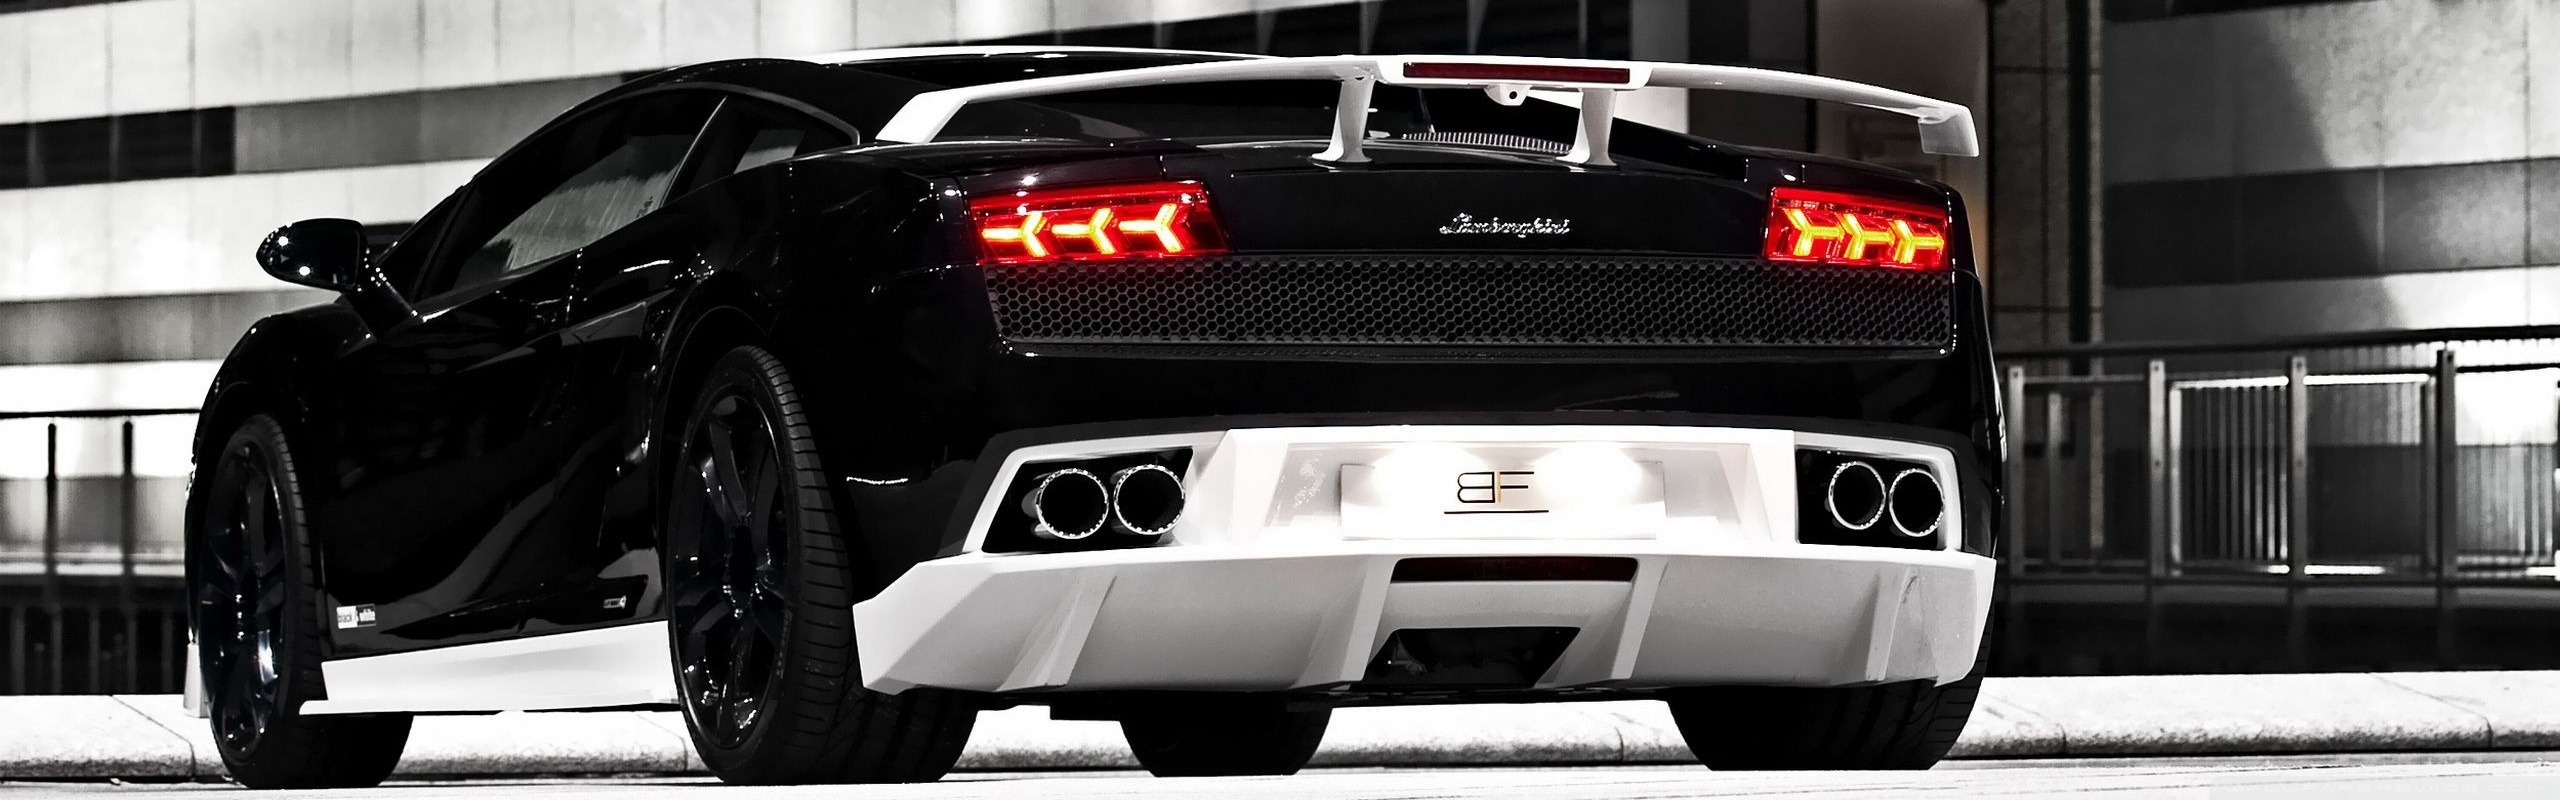 Best Lamborghini Wallpapers Hd 1080p - HD Wallpaper 